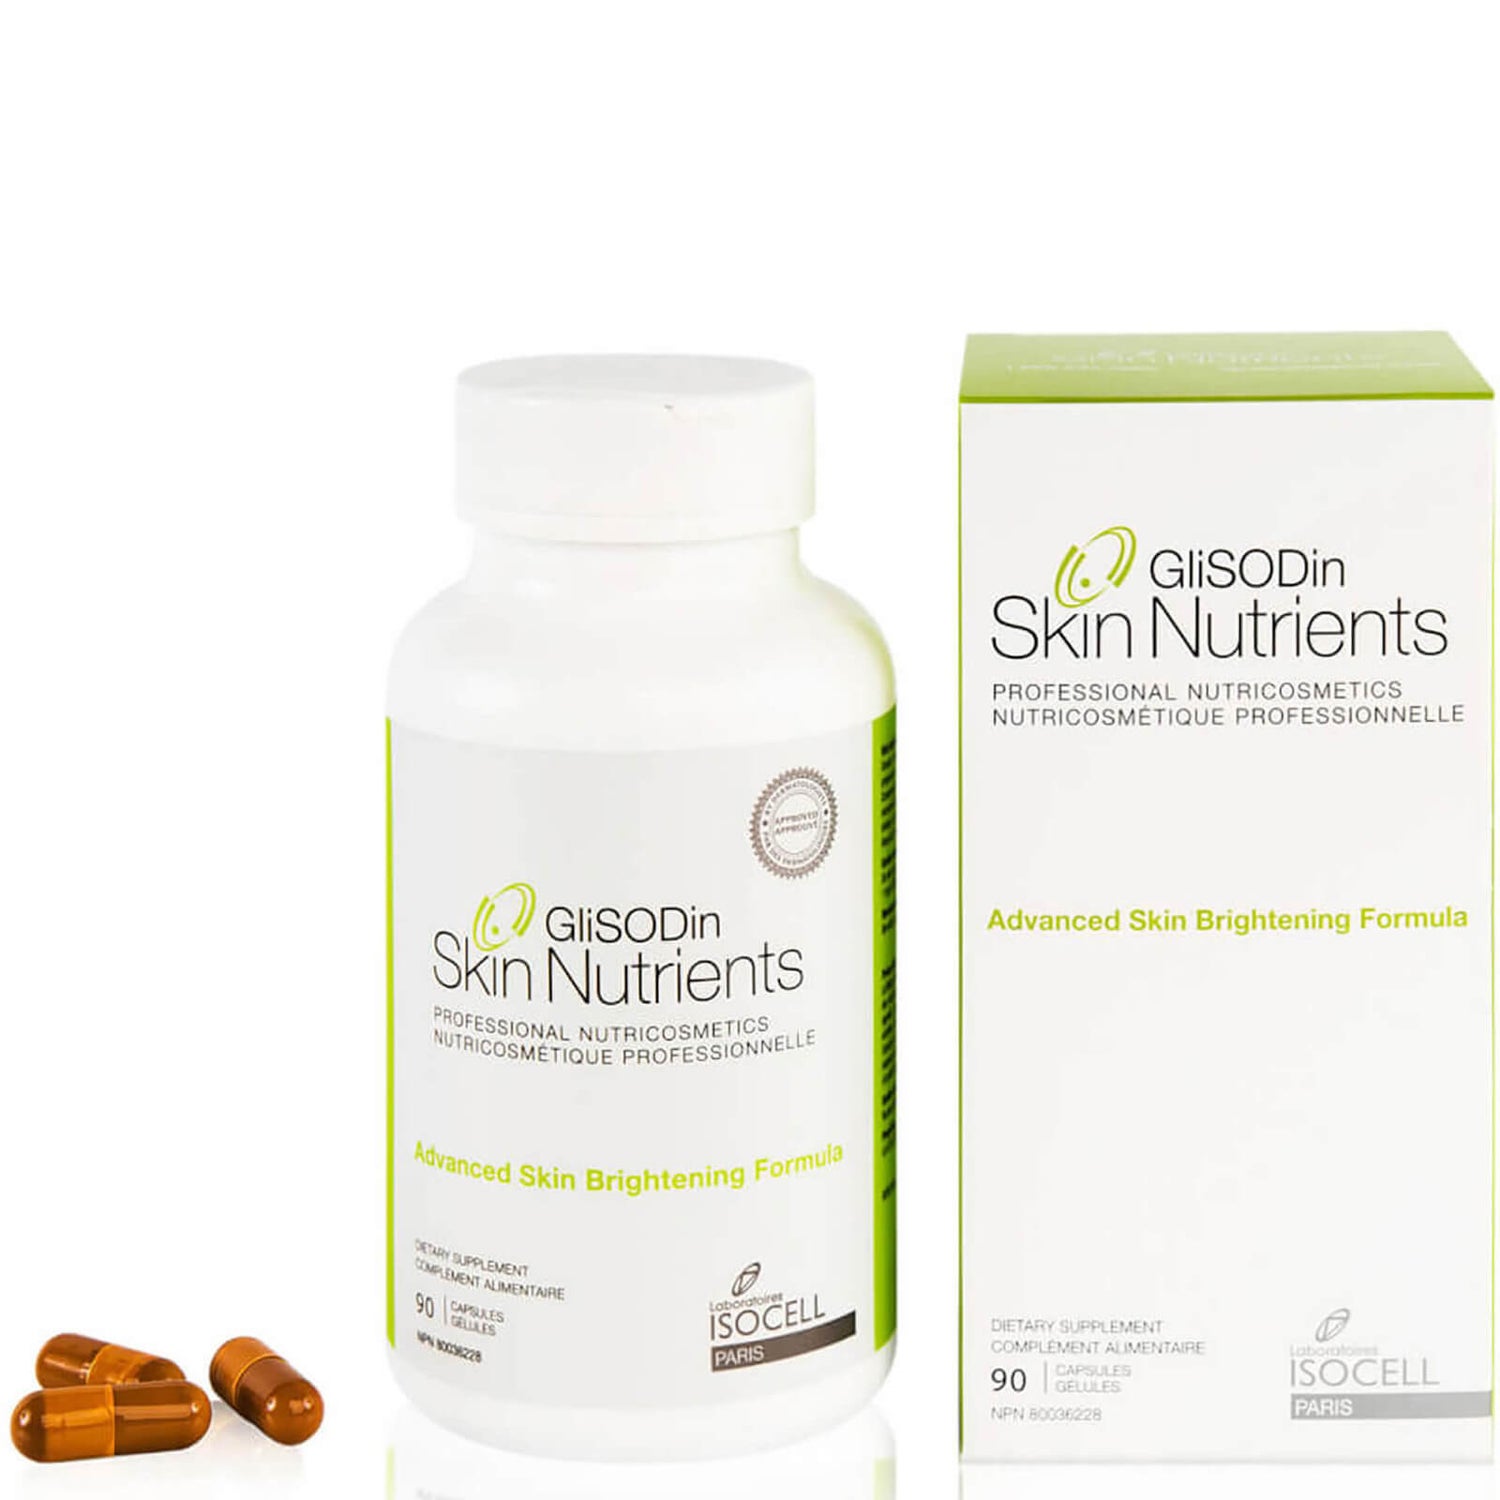 GliSODin Skin Nutrients Advanced Skin Brightening Formula (90 capsules)